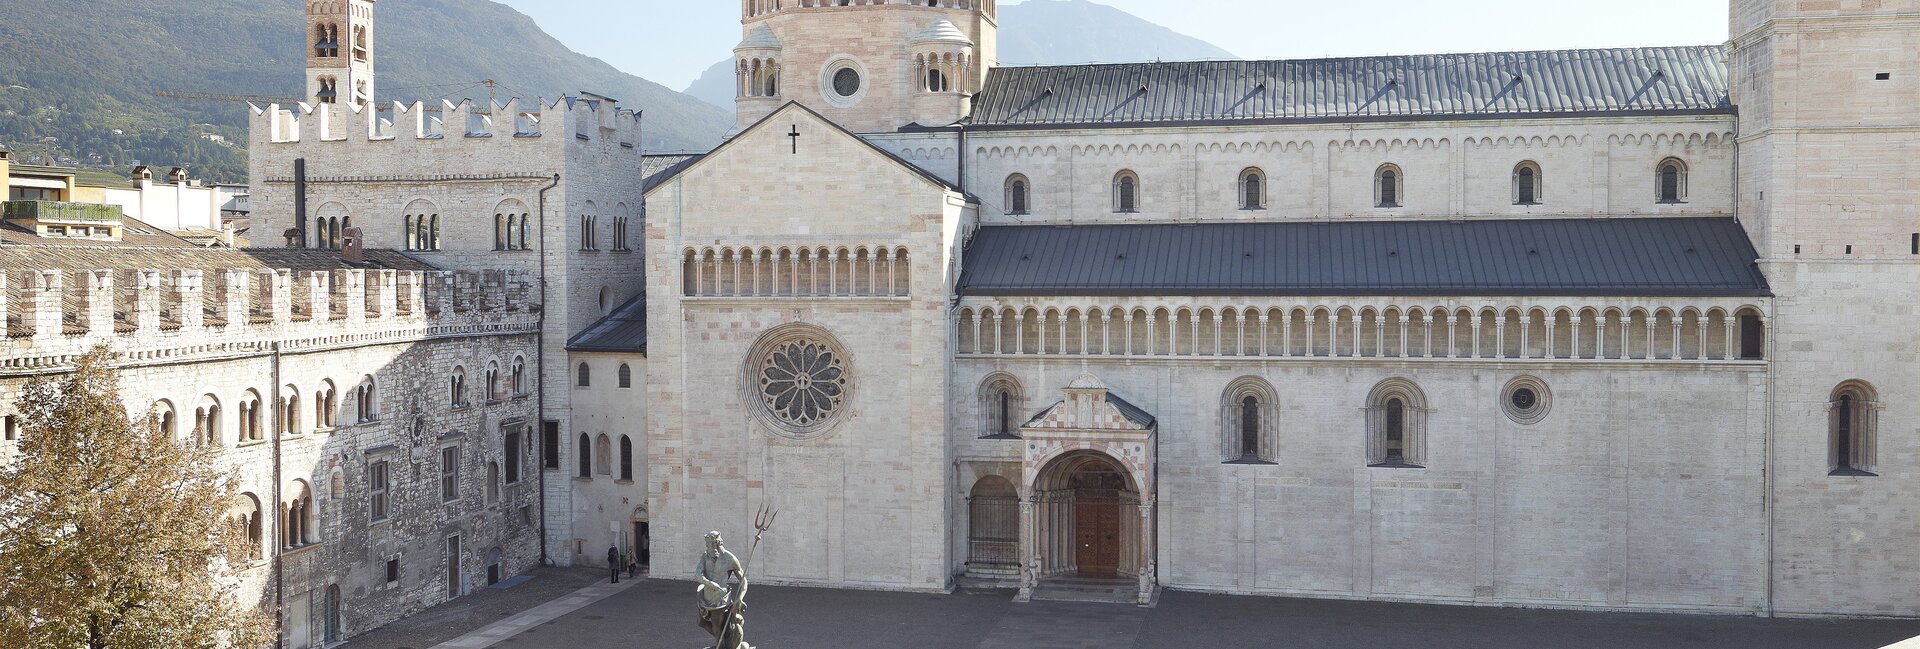 Valle dell'Adige - Trento - Piazza Duomo
